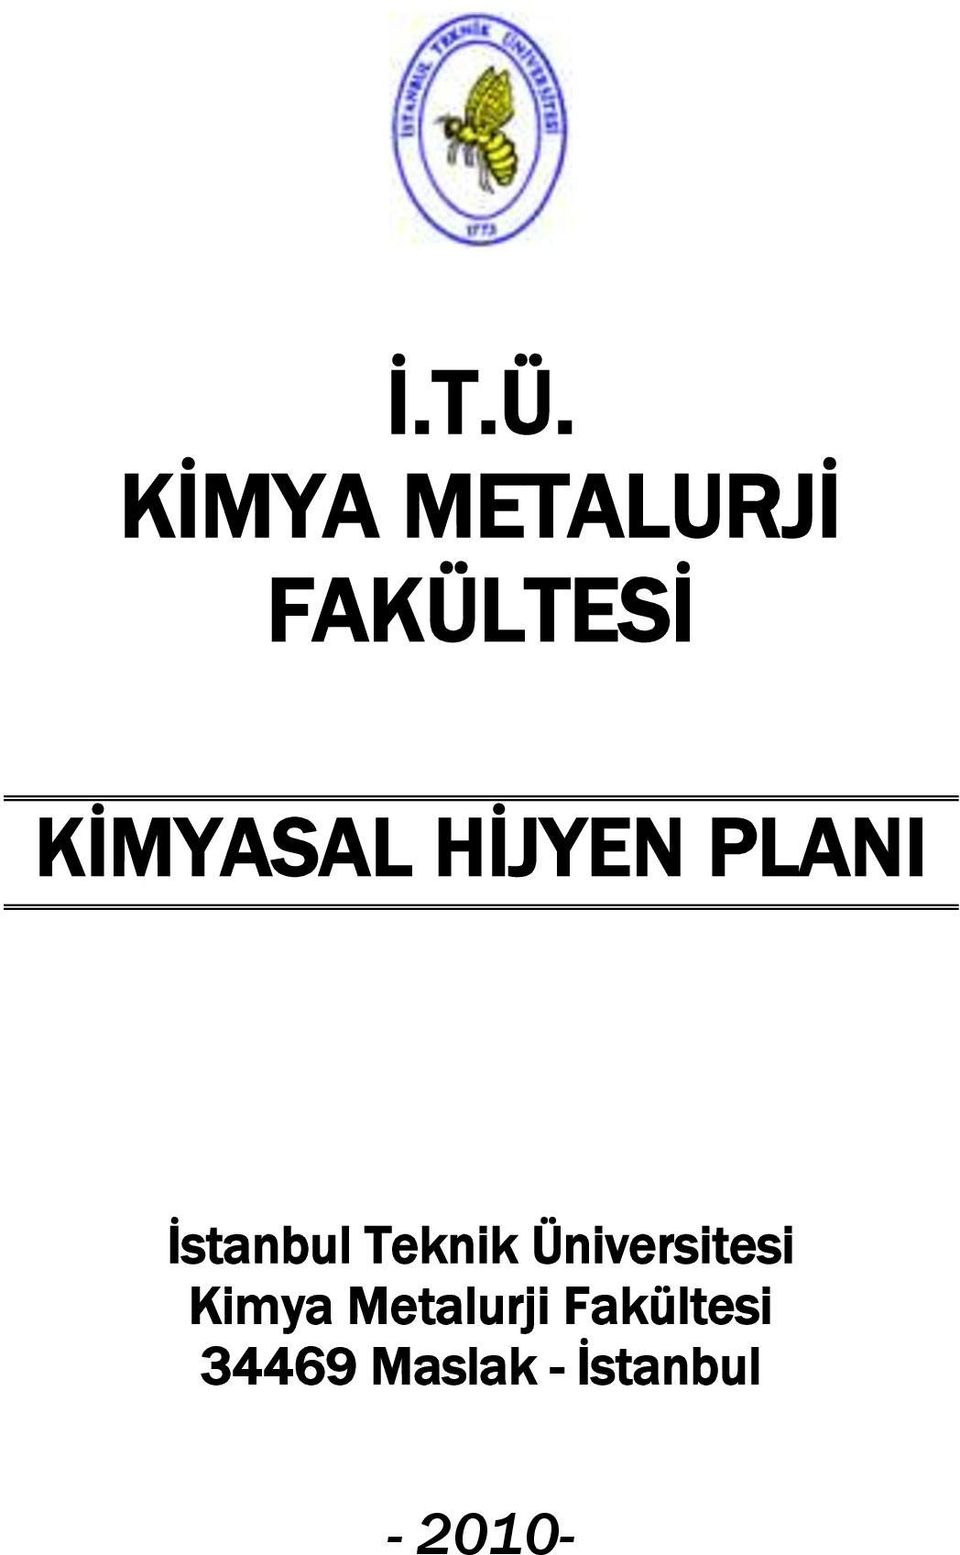 HİJYEN PLANI İstanbul Teknik